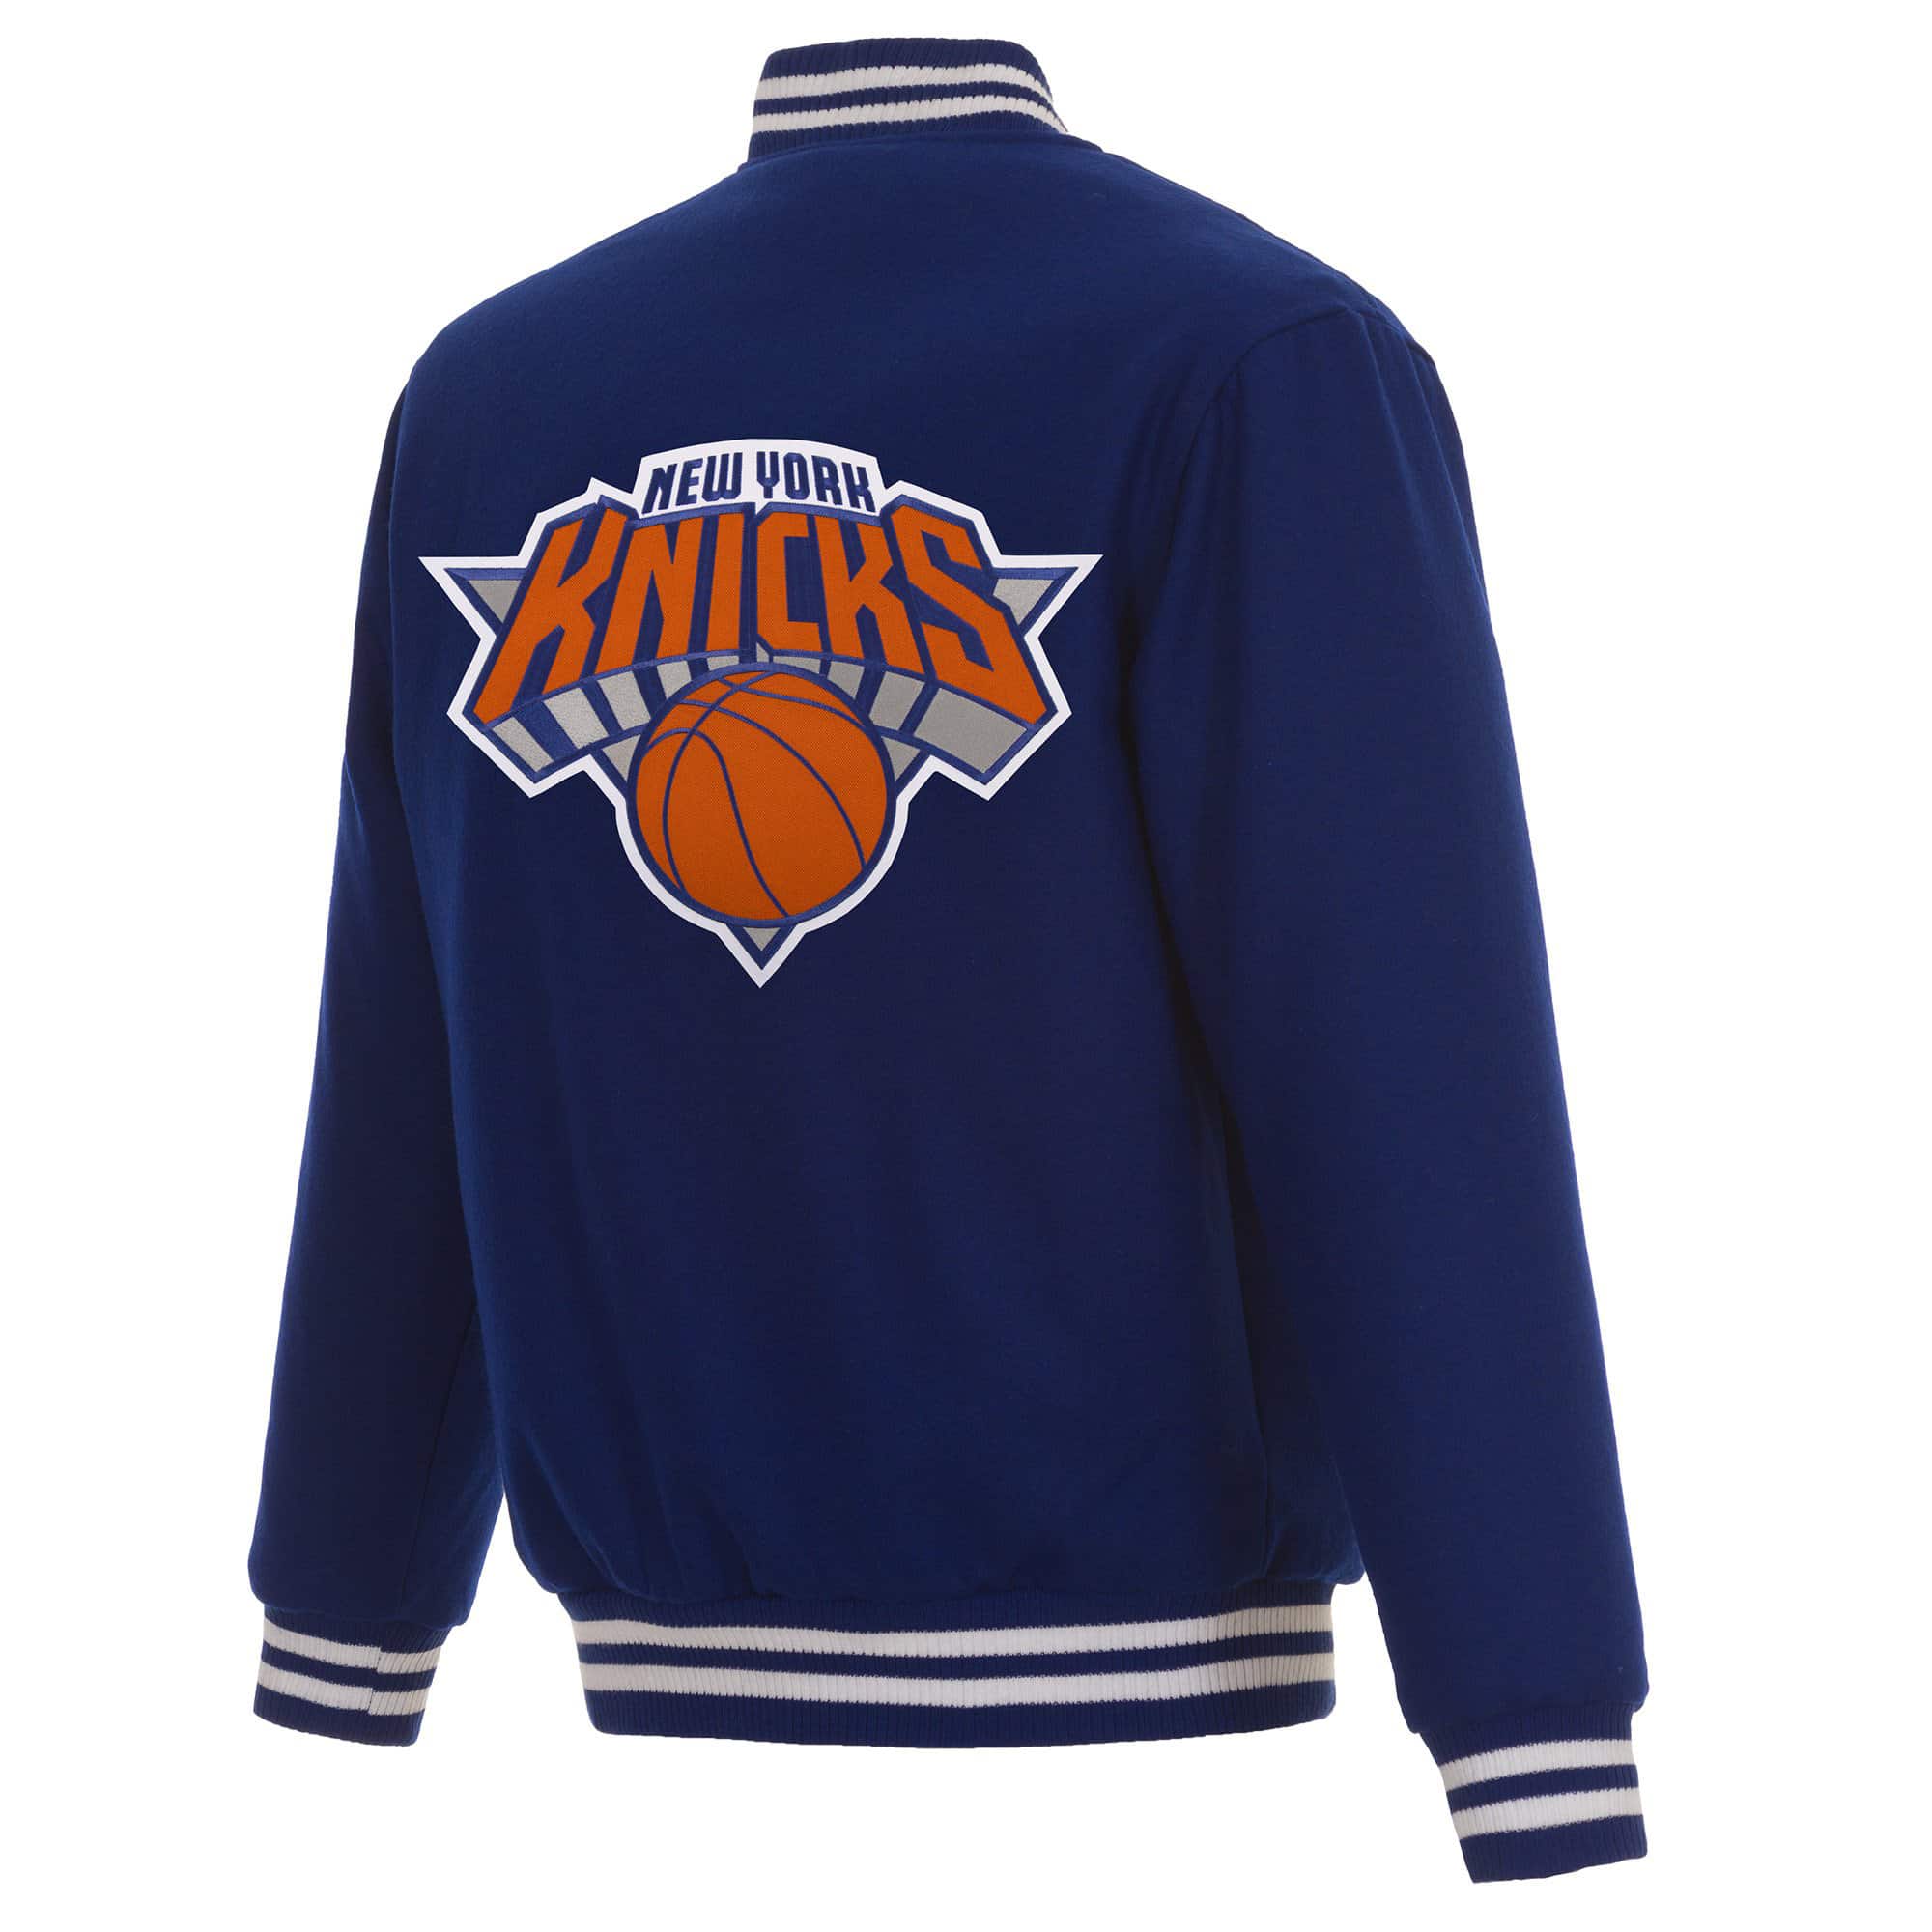 Jeff Hamilton Wool & Leather Knicks Jacket M